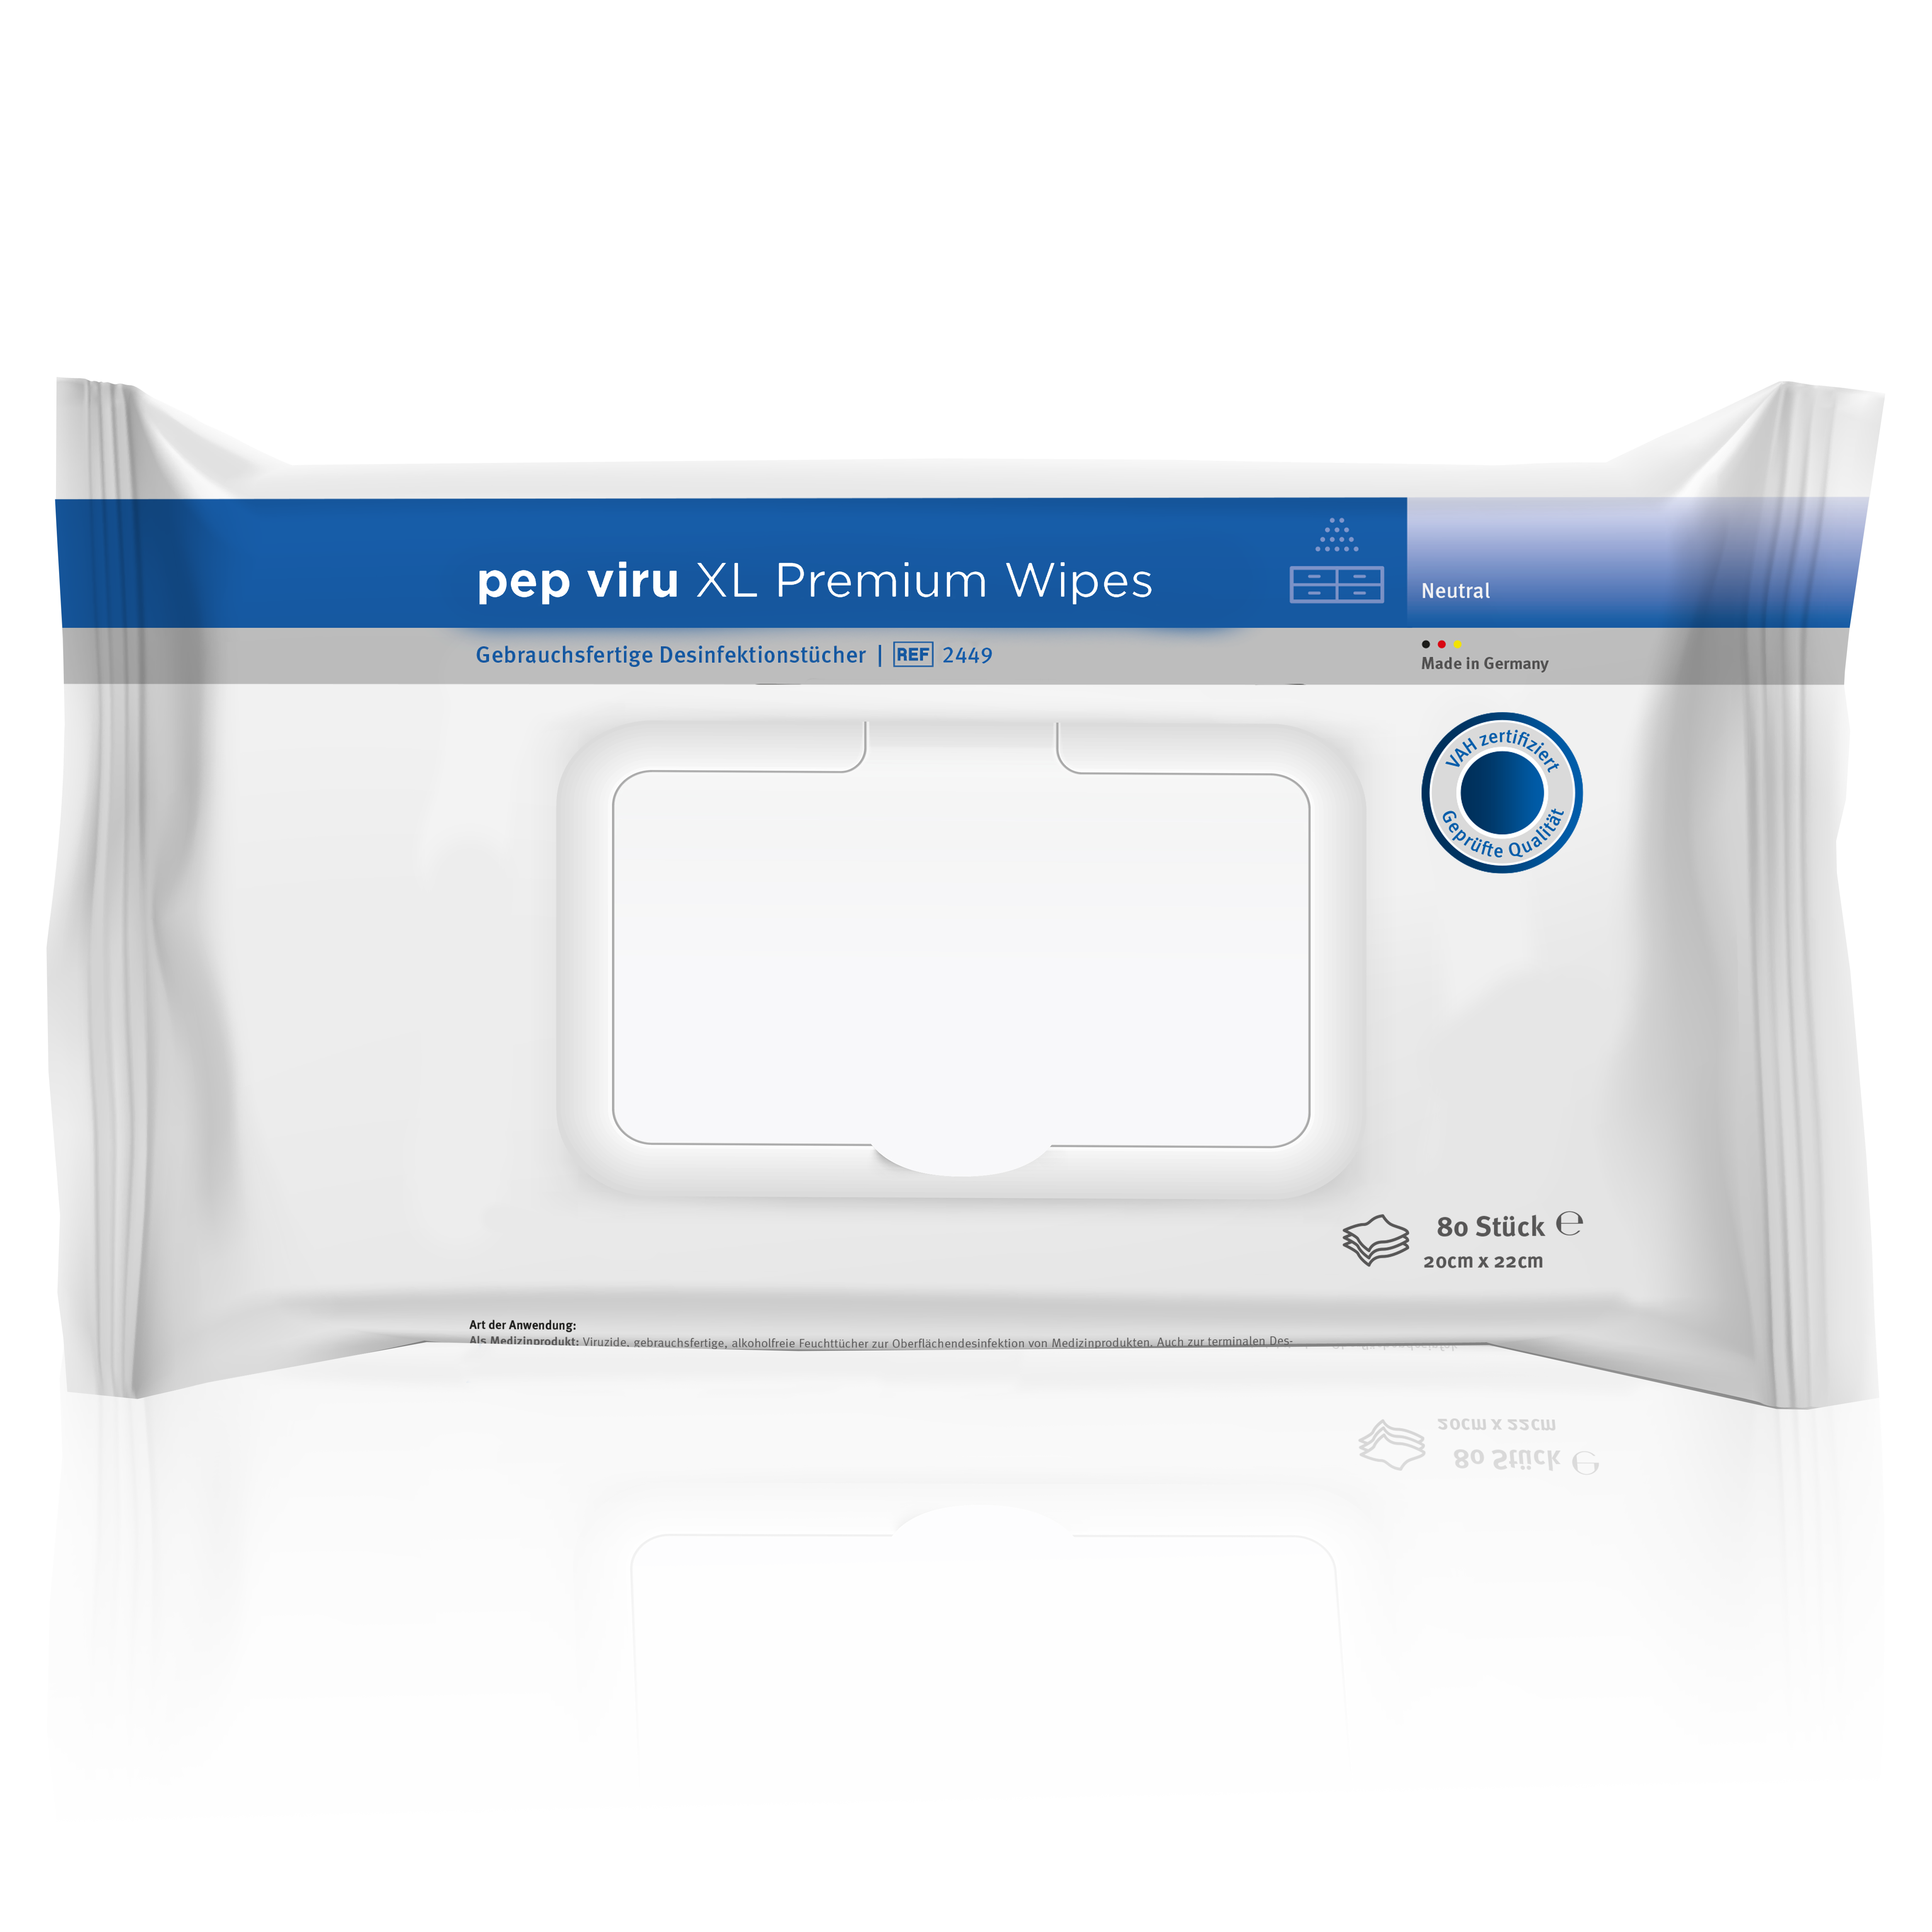 pep viru XL PremiumWipes, 80 gebrauchsfertige, alkoholfreie Desinfektionstücher, viruzid